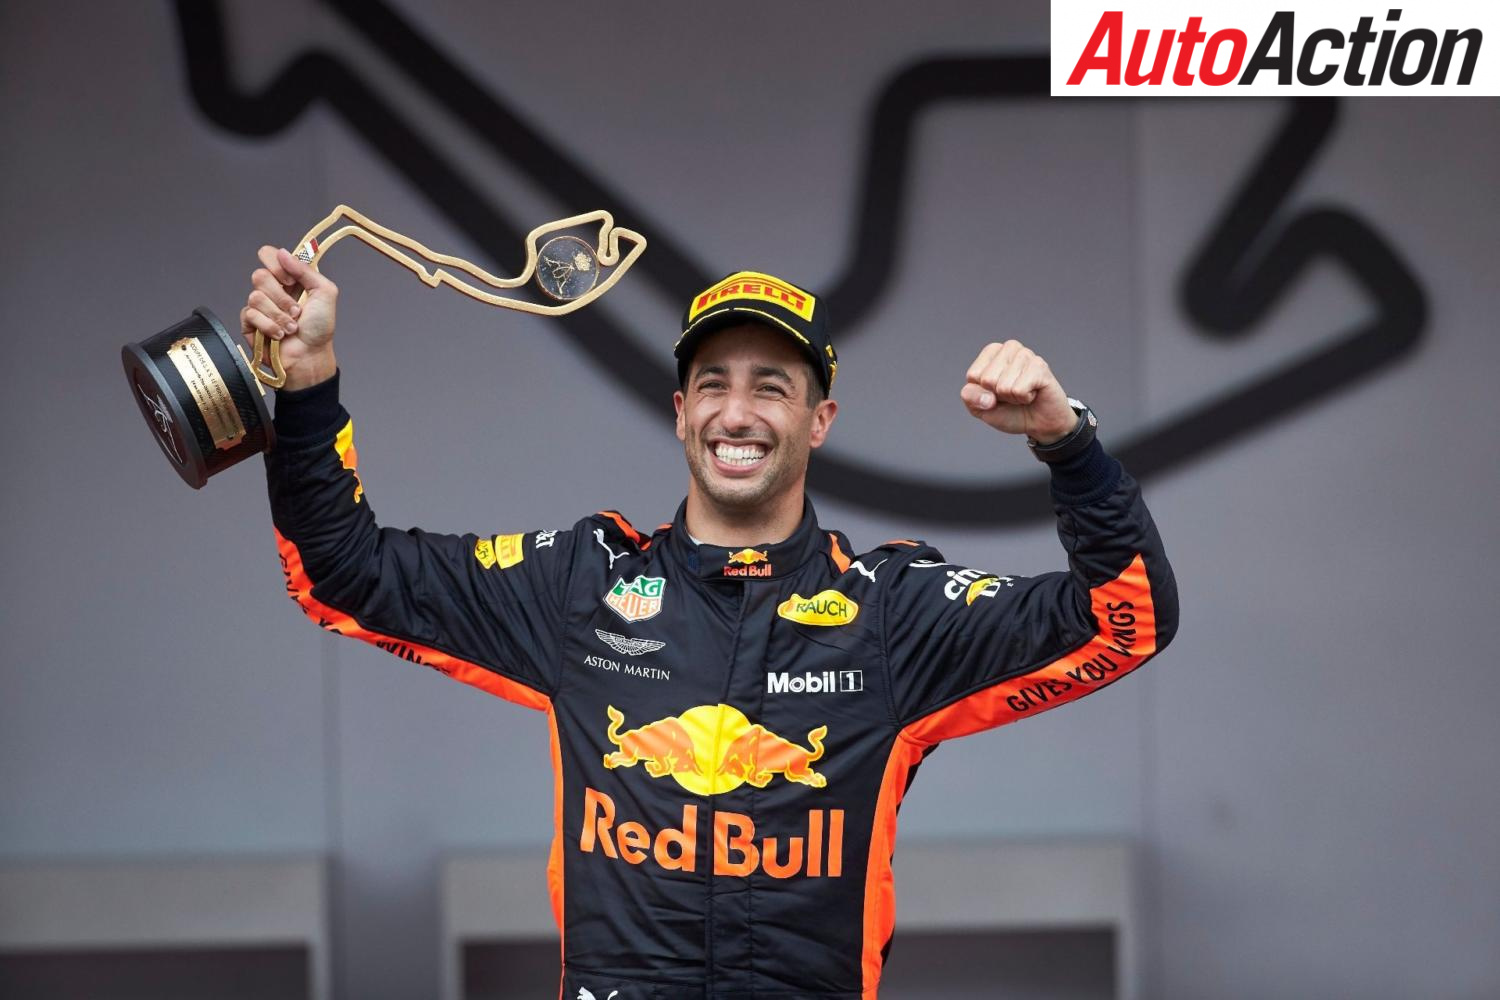 Daniel Ricciardo celebrating his Monaco GP win - Photo: LAT